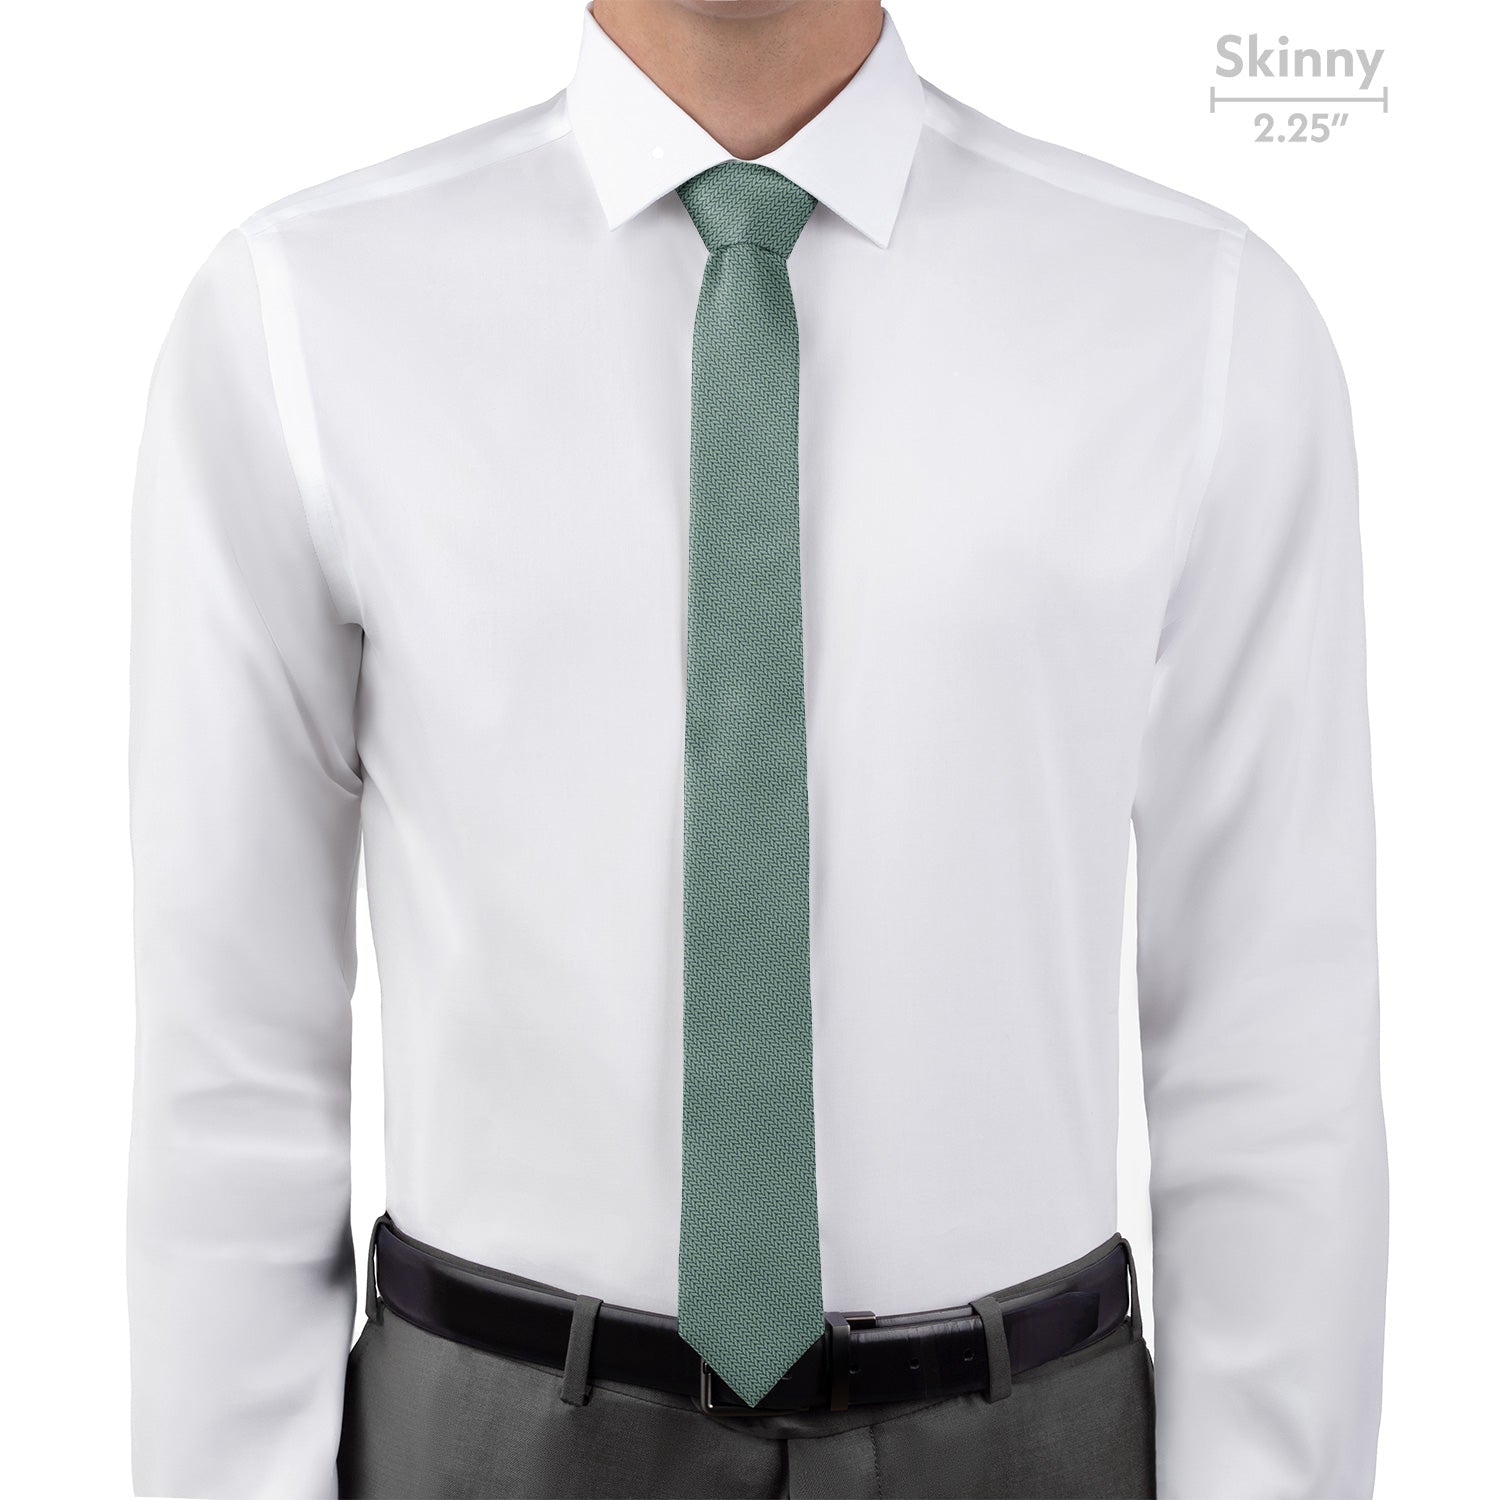 Faux Knit Necktie - Skinny - Knotty Tie Co.